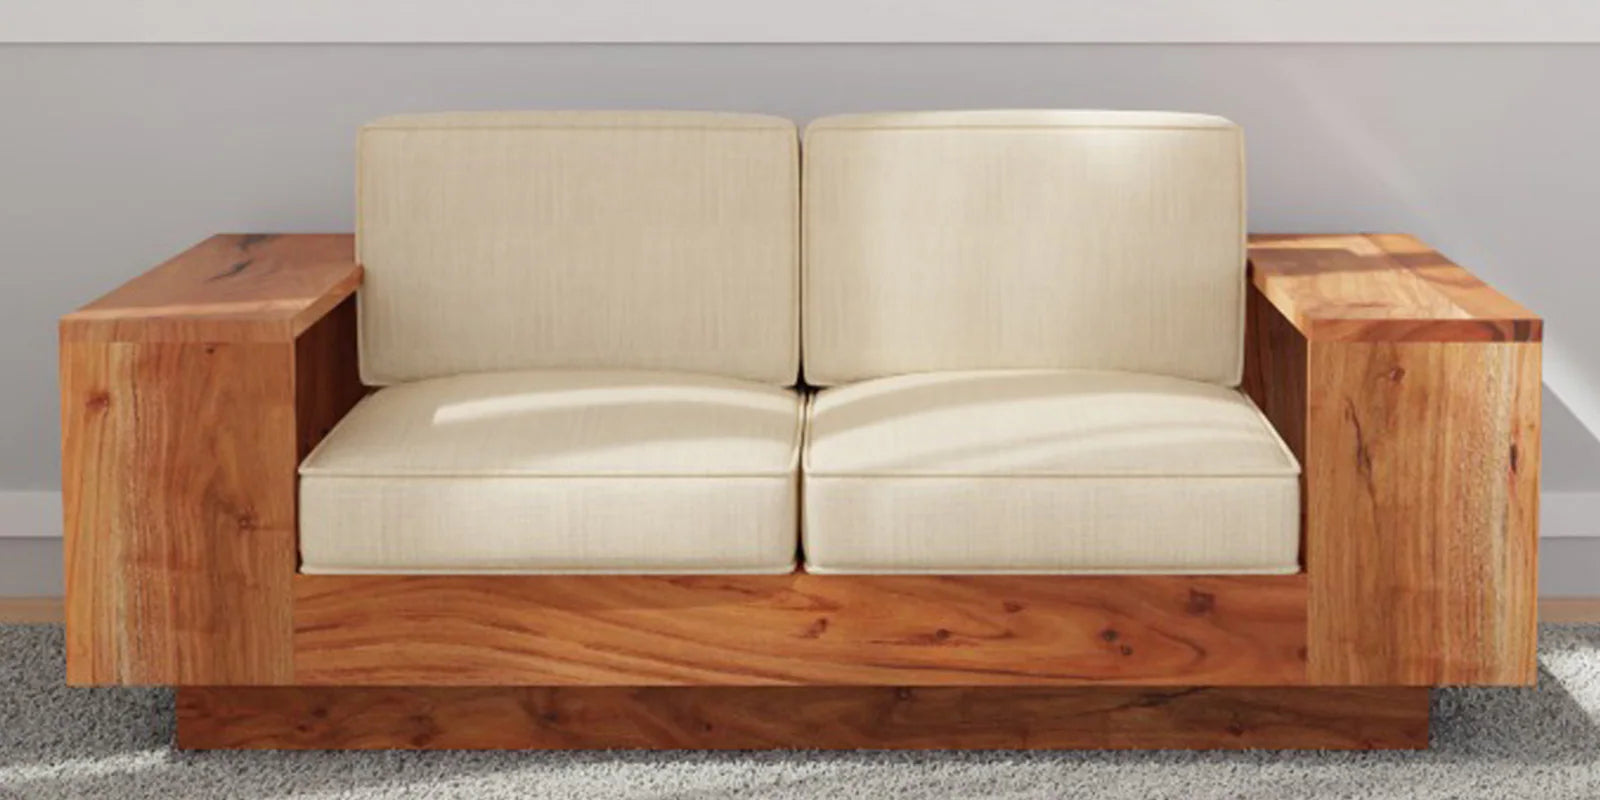 Solid Wood 2 Seater Sofa In Light Reddish Honey Finish